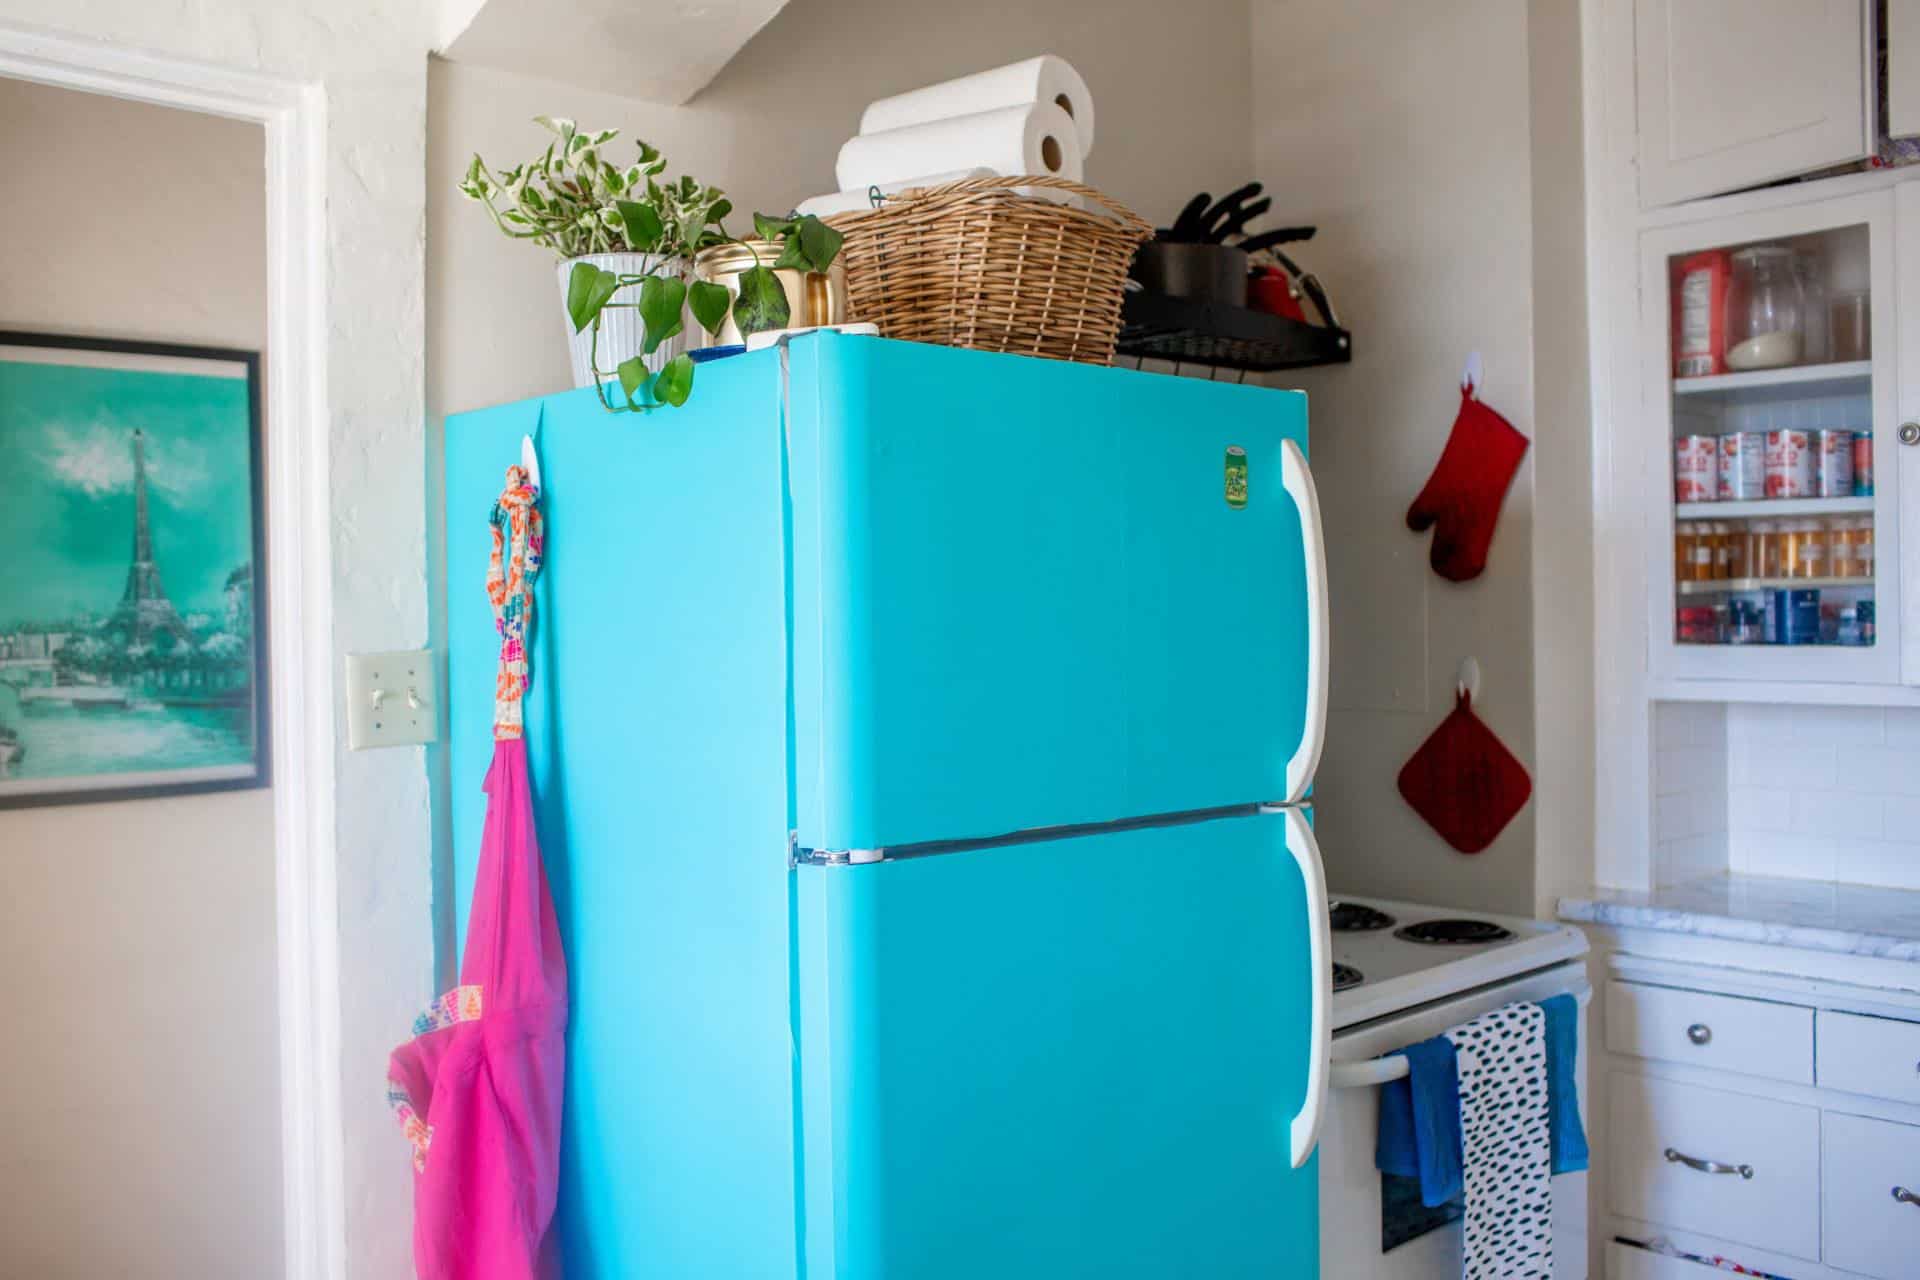 Bright blue painted refrigerator.